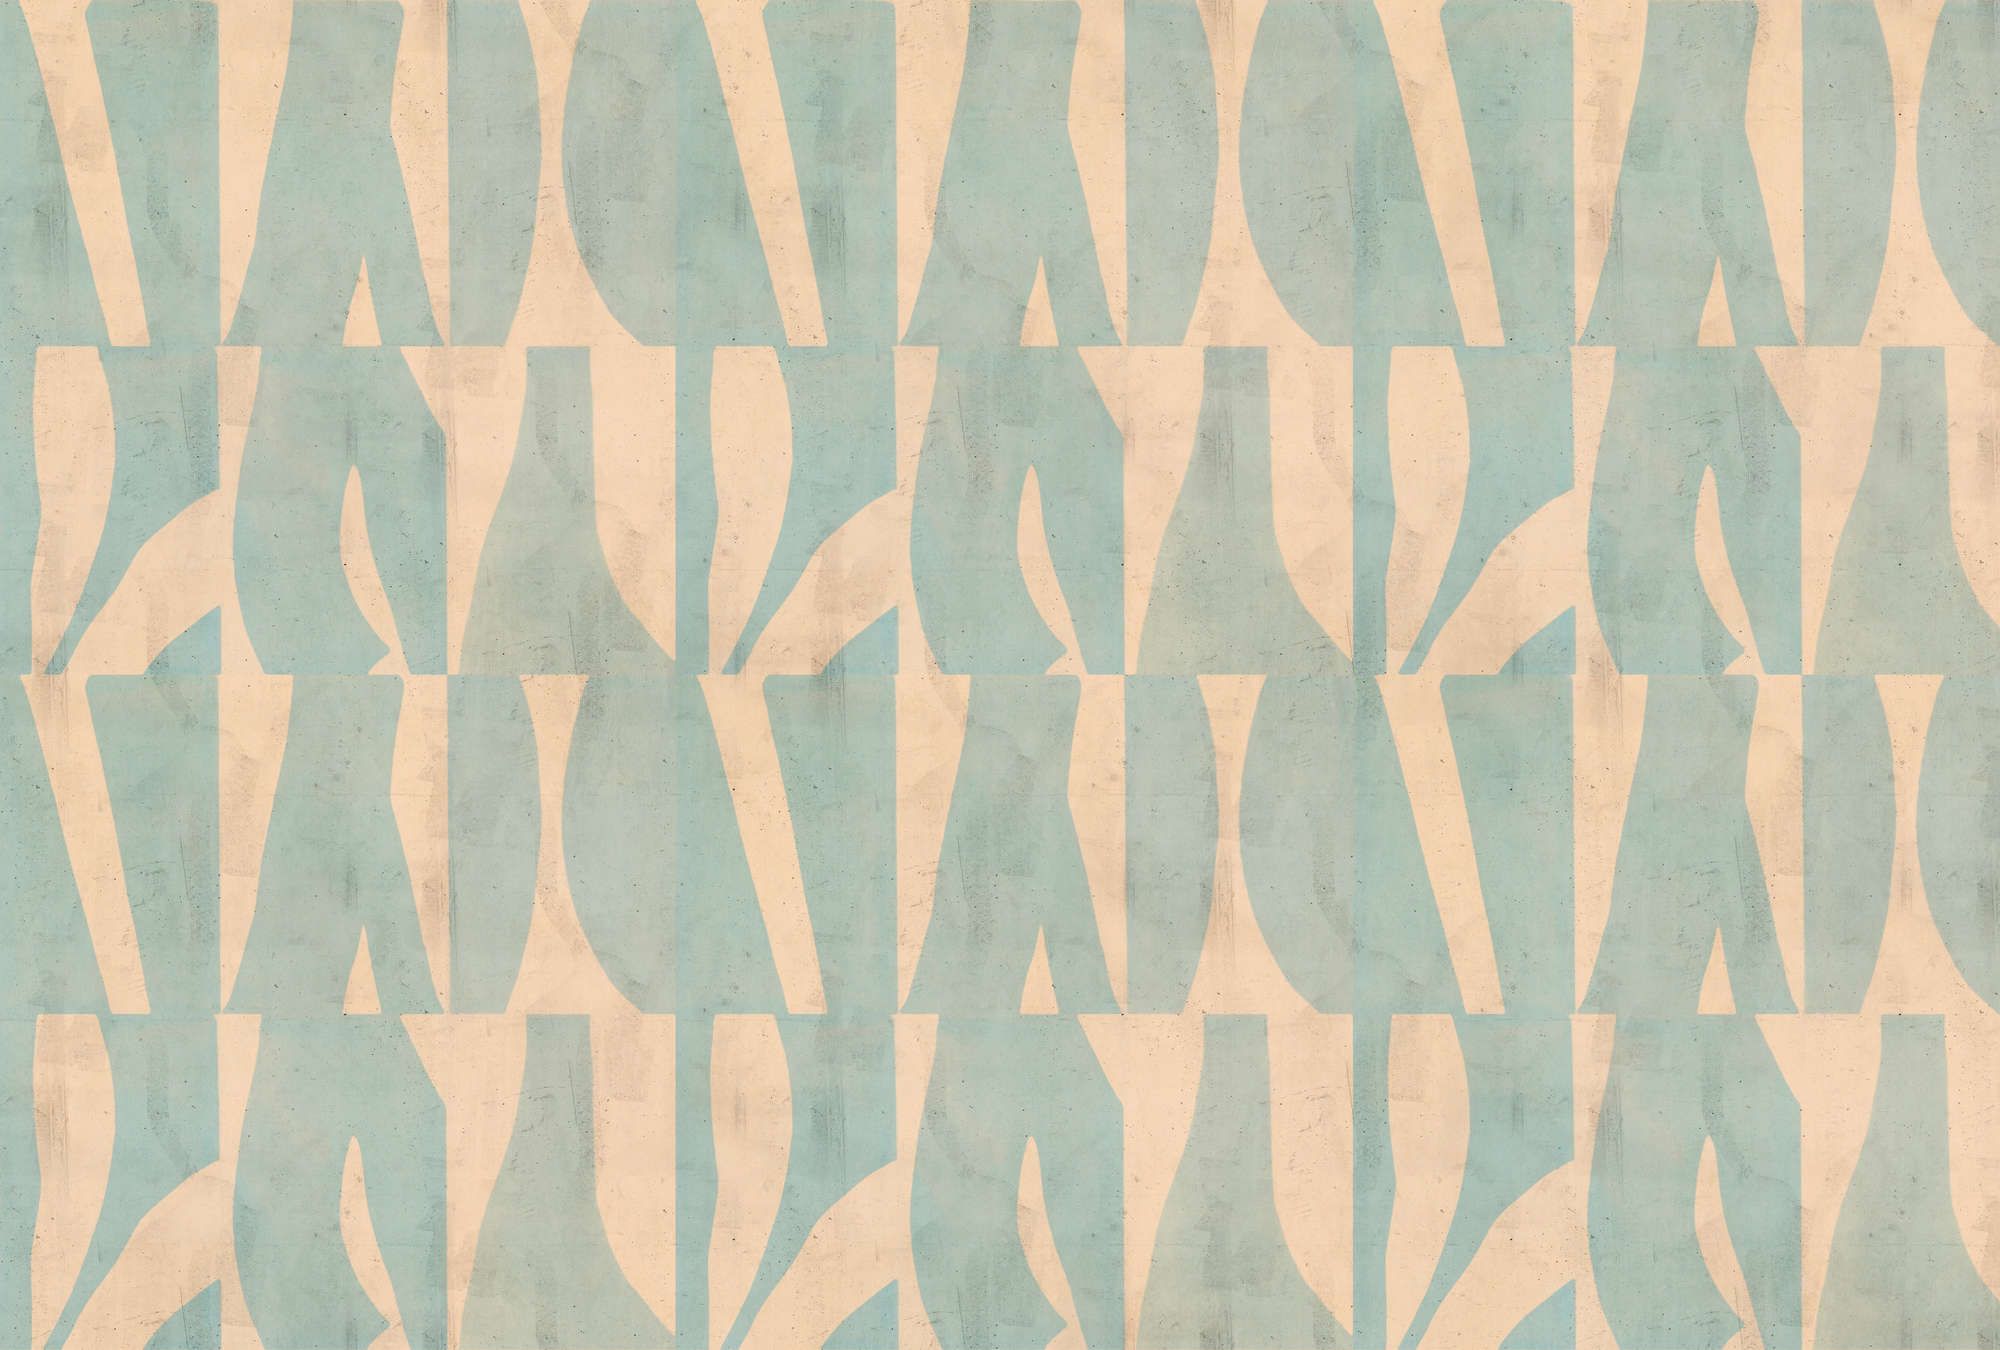             Fotomural »laila« - Motivo gráfico sobre textura de yeso de hormigón - Beige, verde menta | Mate, no tejido liso
        